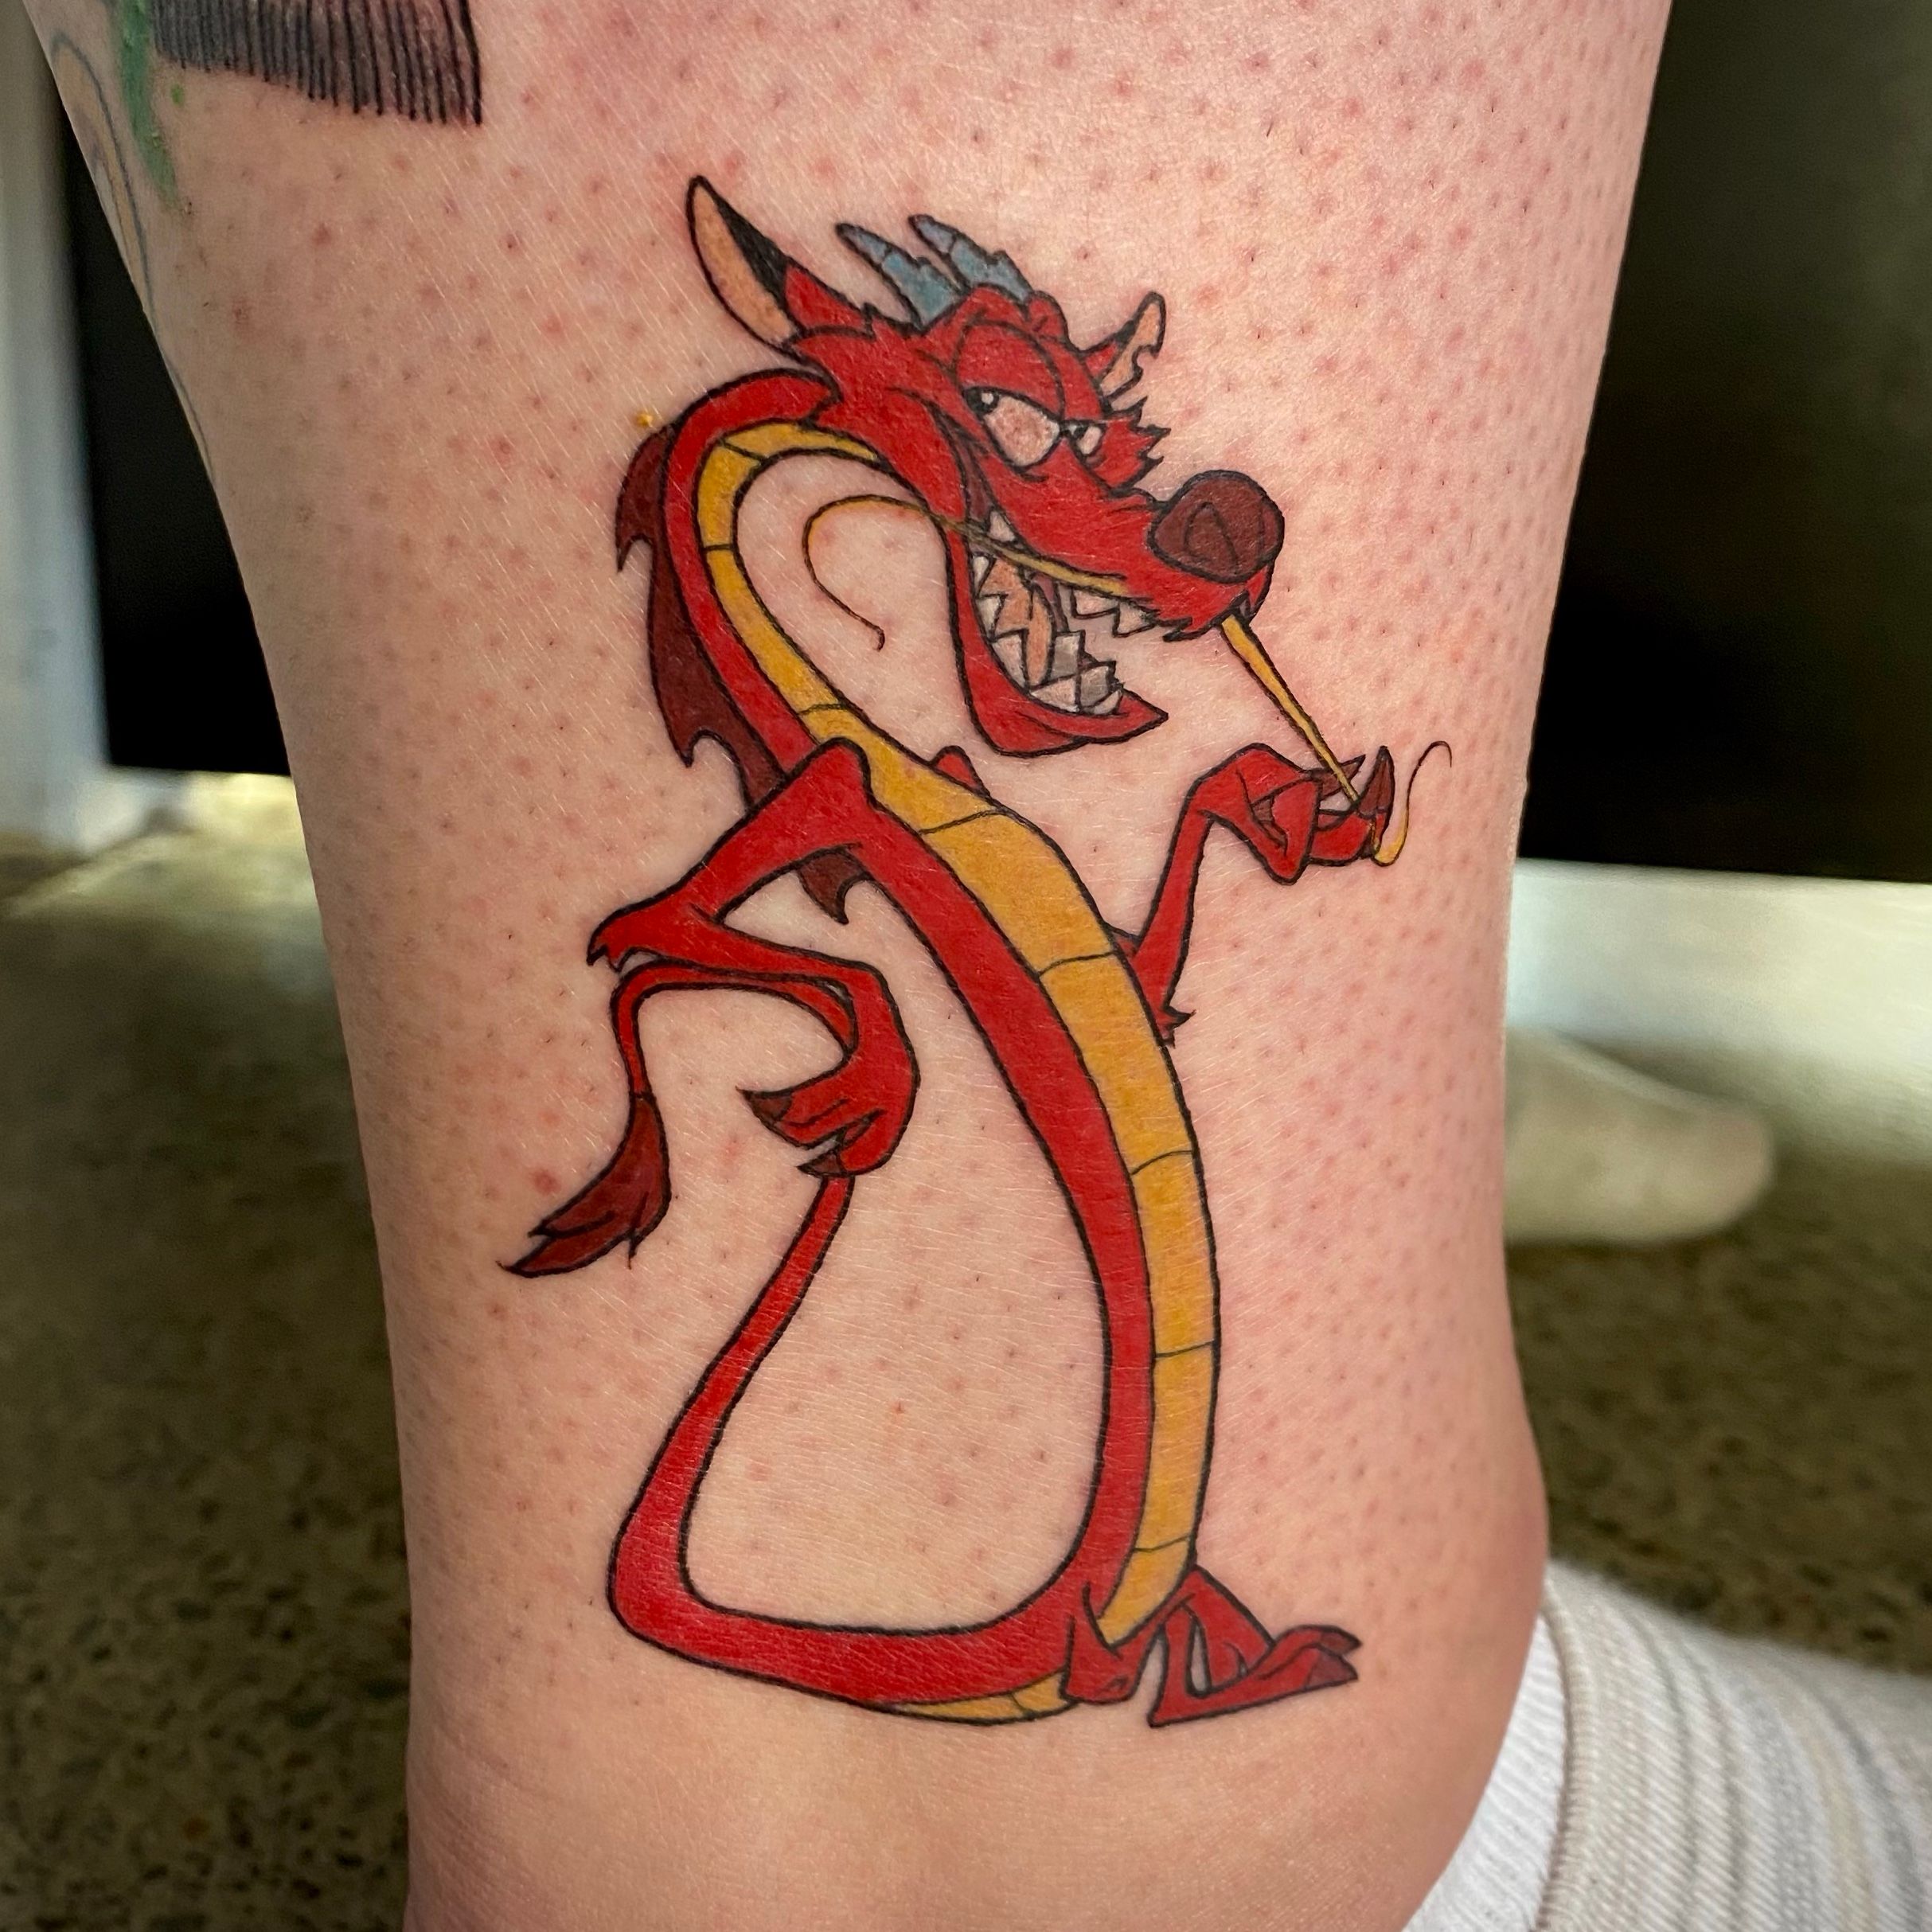 Dragon from Mulan tattoo